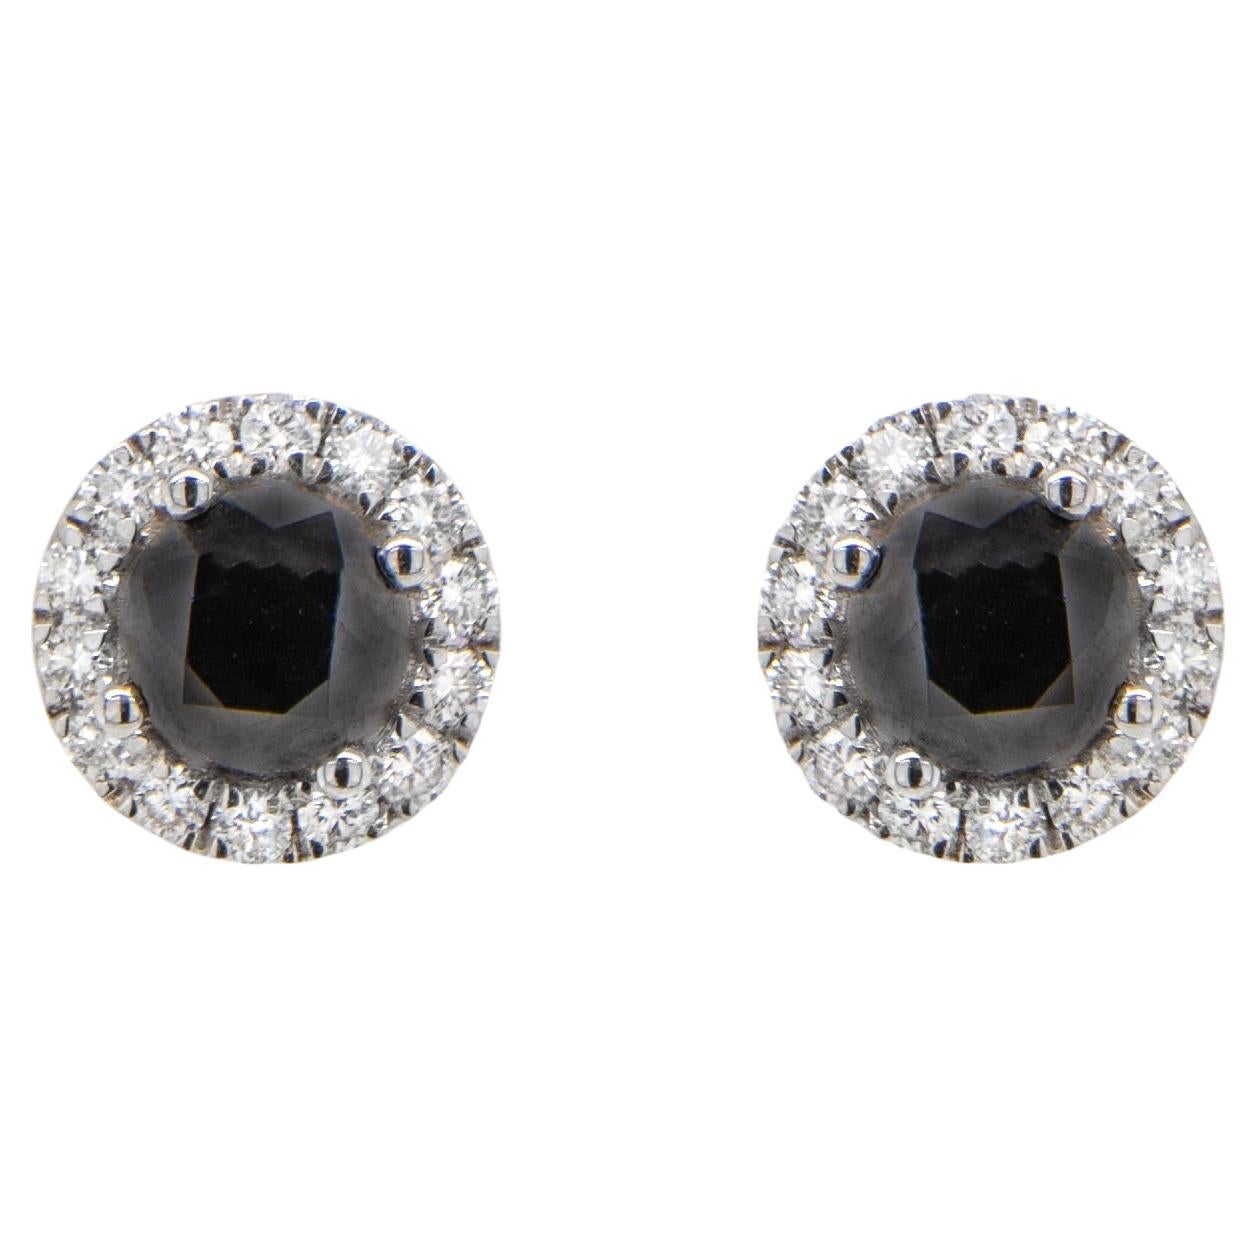 Black and White Diamond Stud Earrings 3.30 Carats Total 18k White Gold